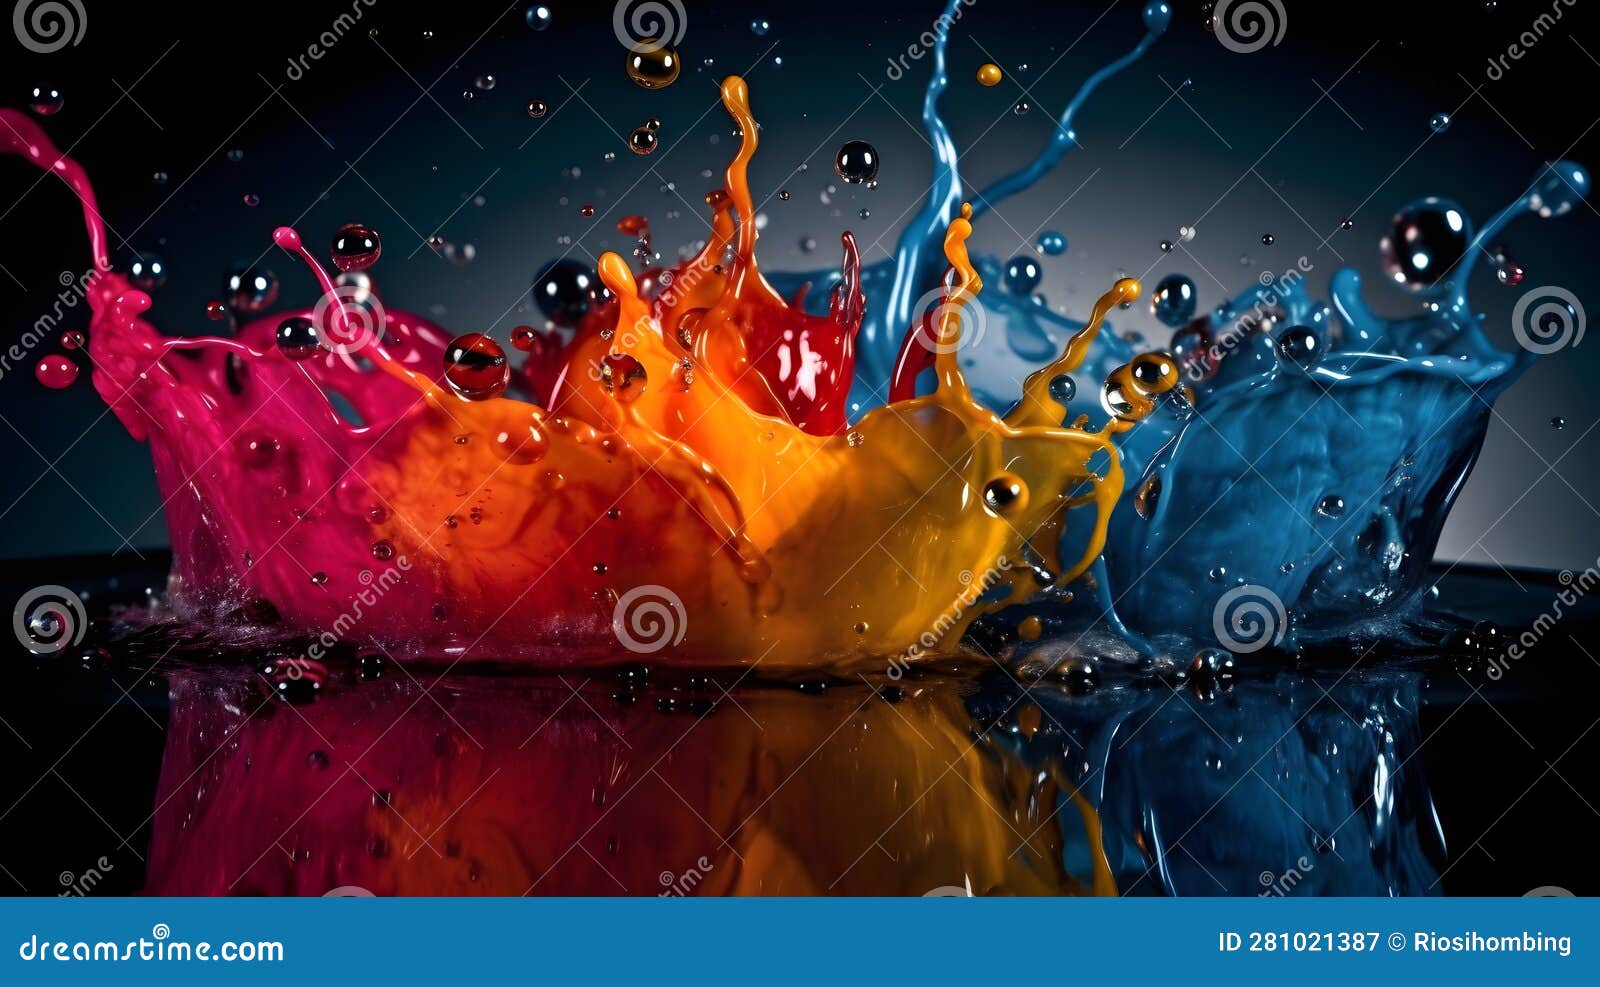 https://thumbs.dreamstime.com/z/abstract-liquid-color-explosion-colorful-artistic-yellow-blue-purple-red-orange-splashing-splatter-drop-ground-black-background-281021387.jpg